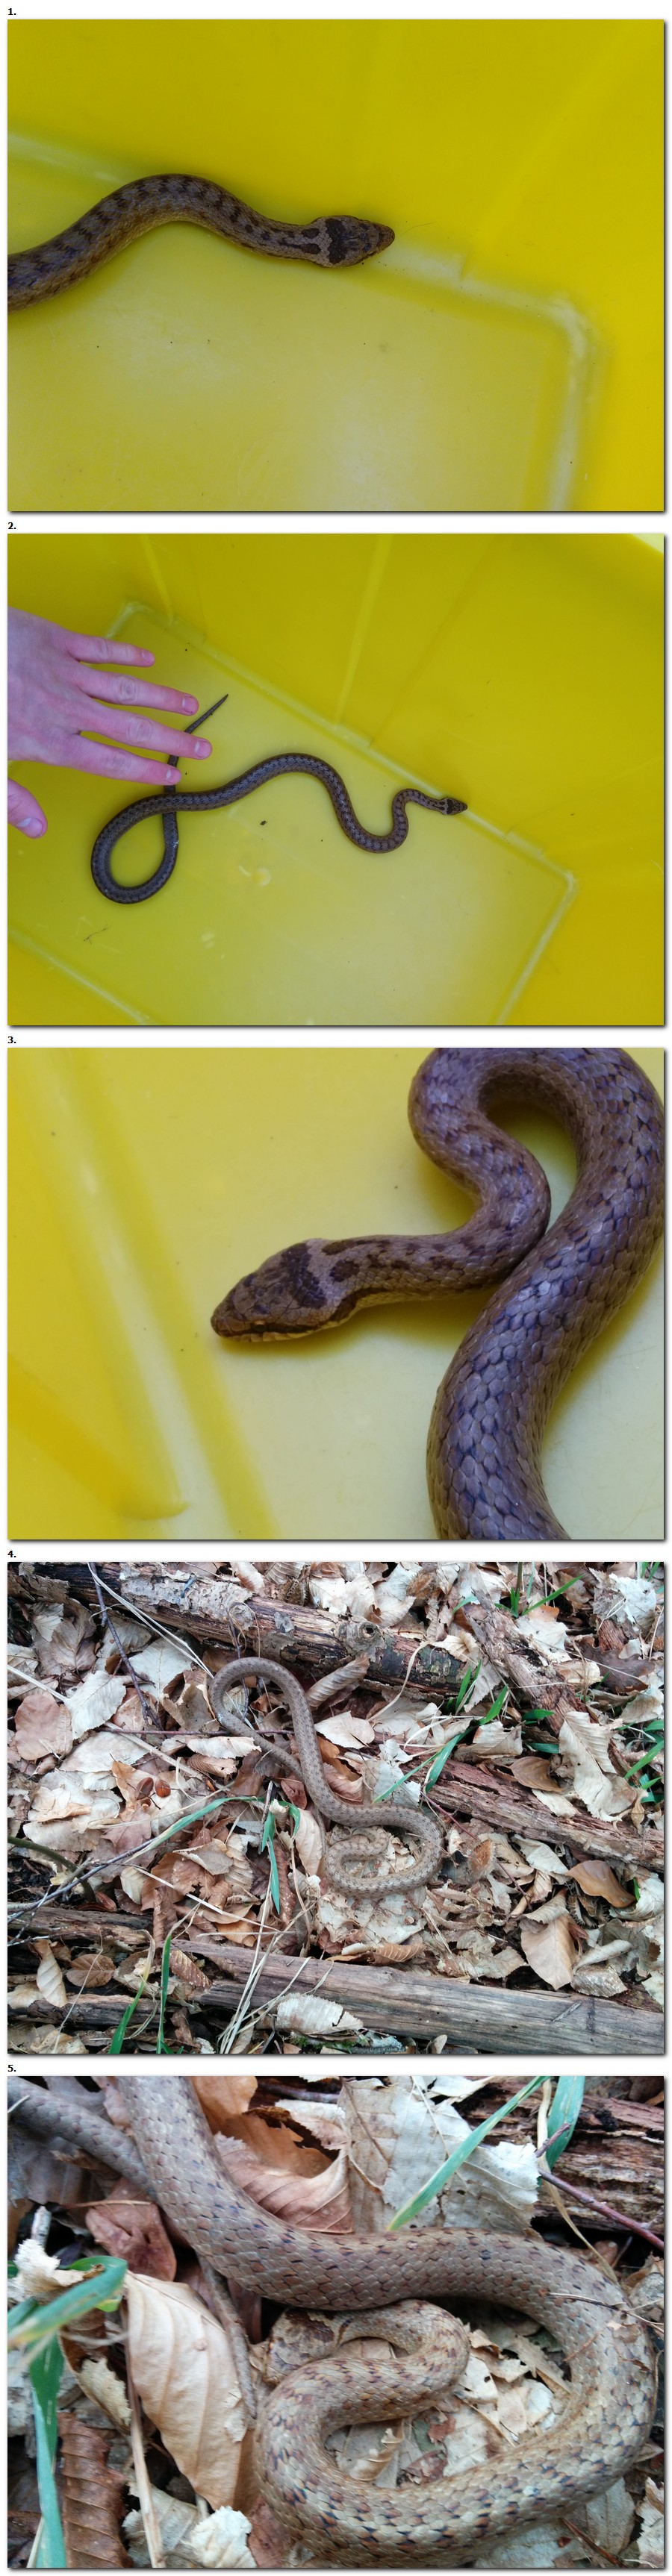 Identification serpent.